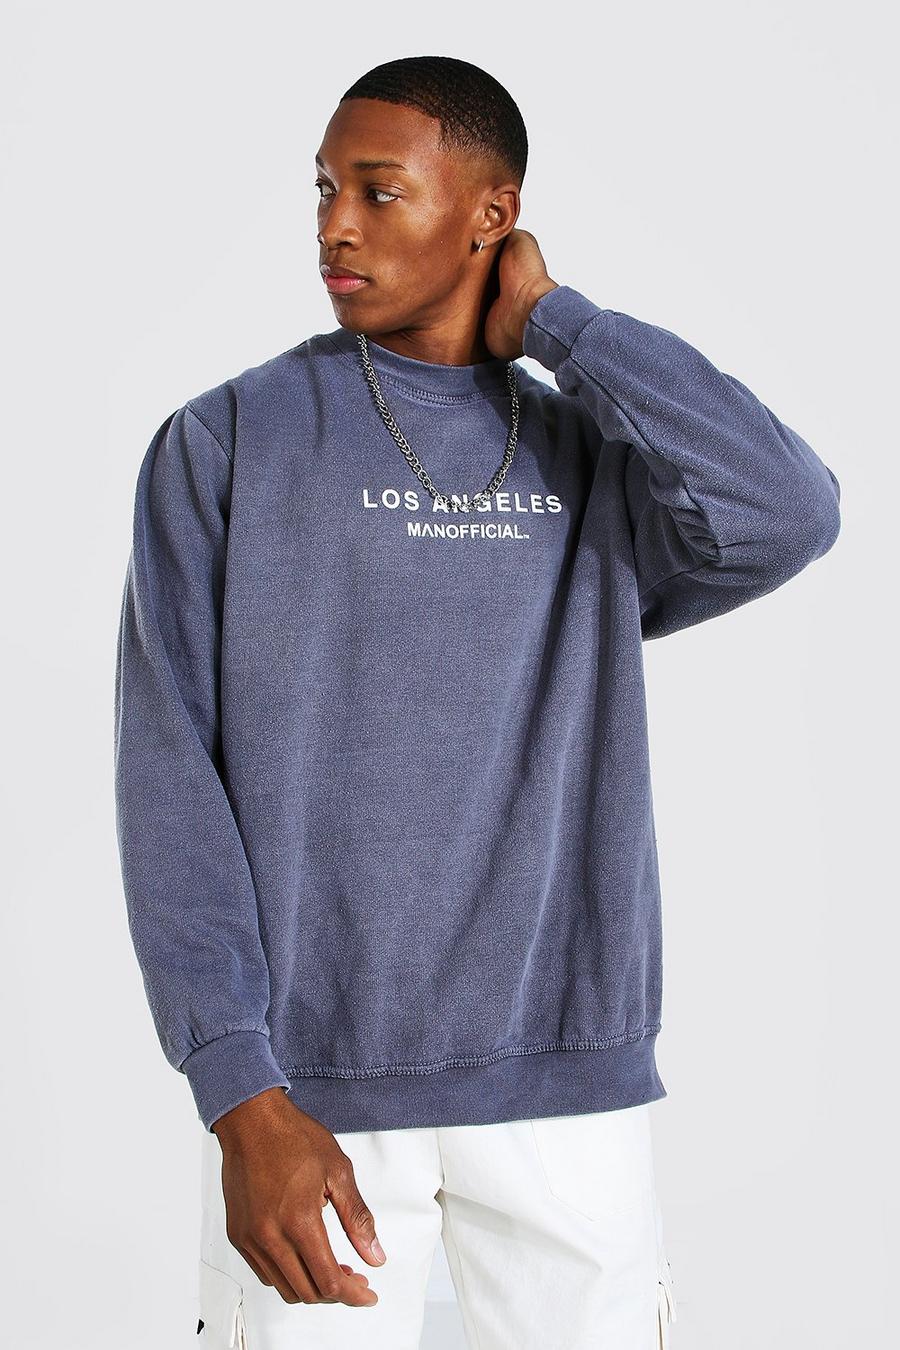 Charcoal grey Oversized Man Official La Overdyed Sweatshirt image number 1